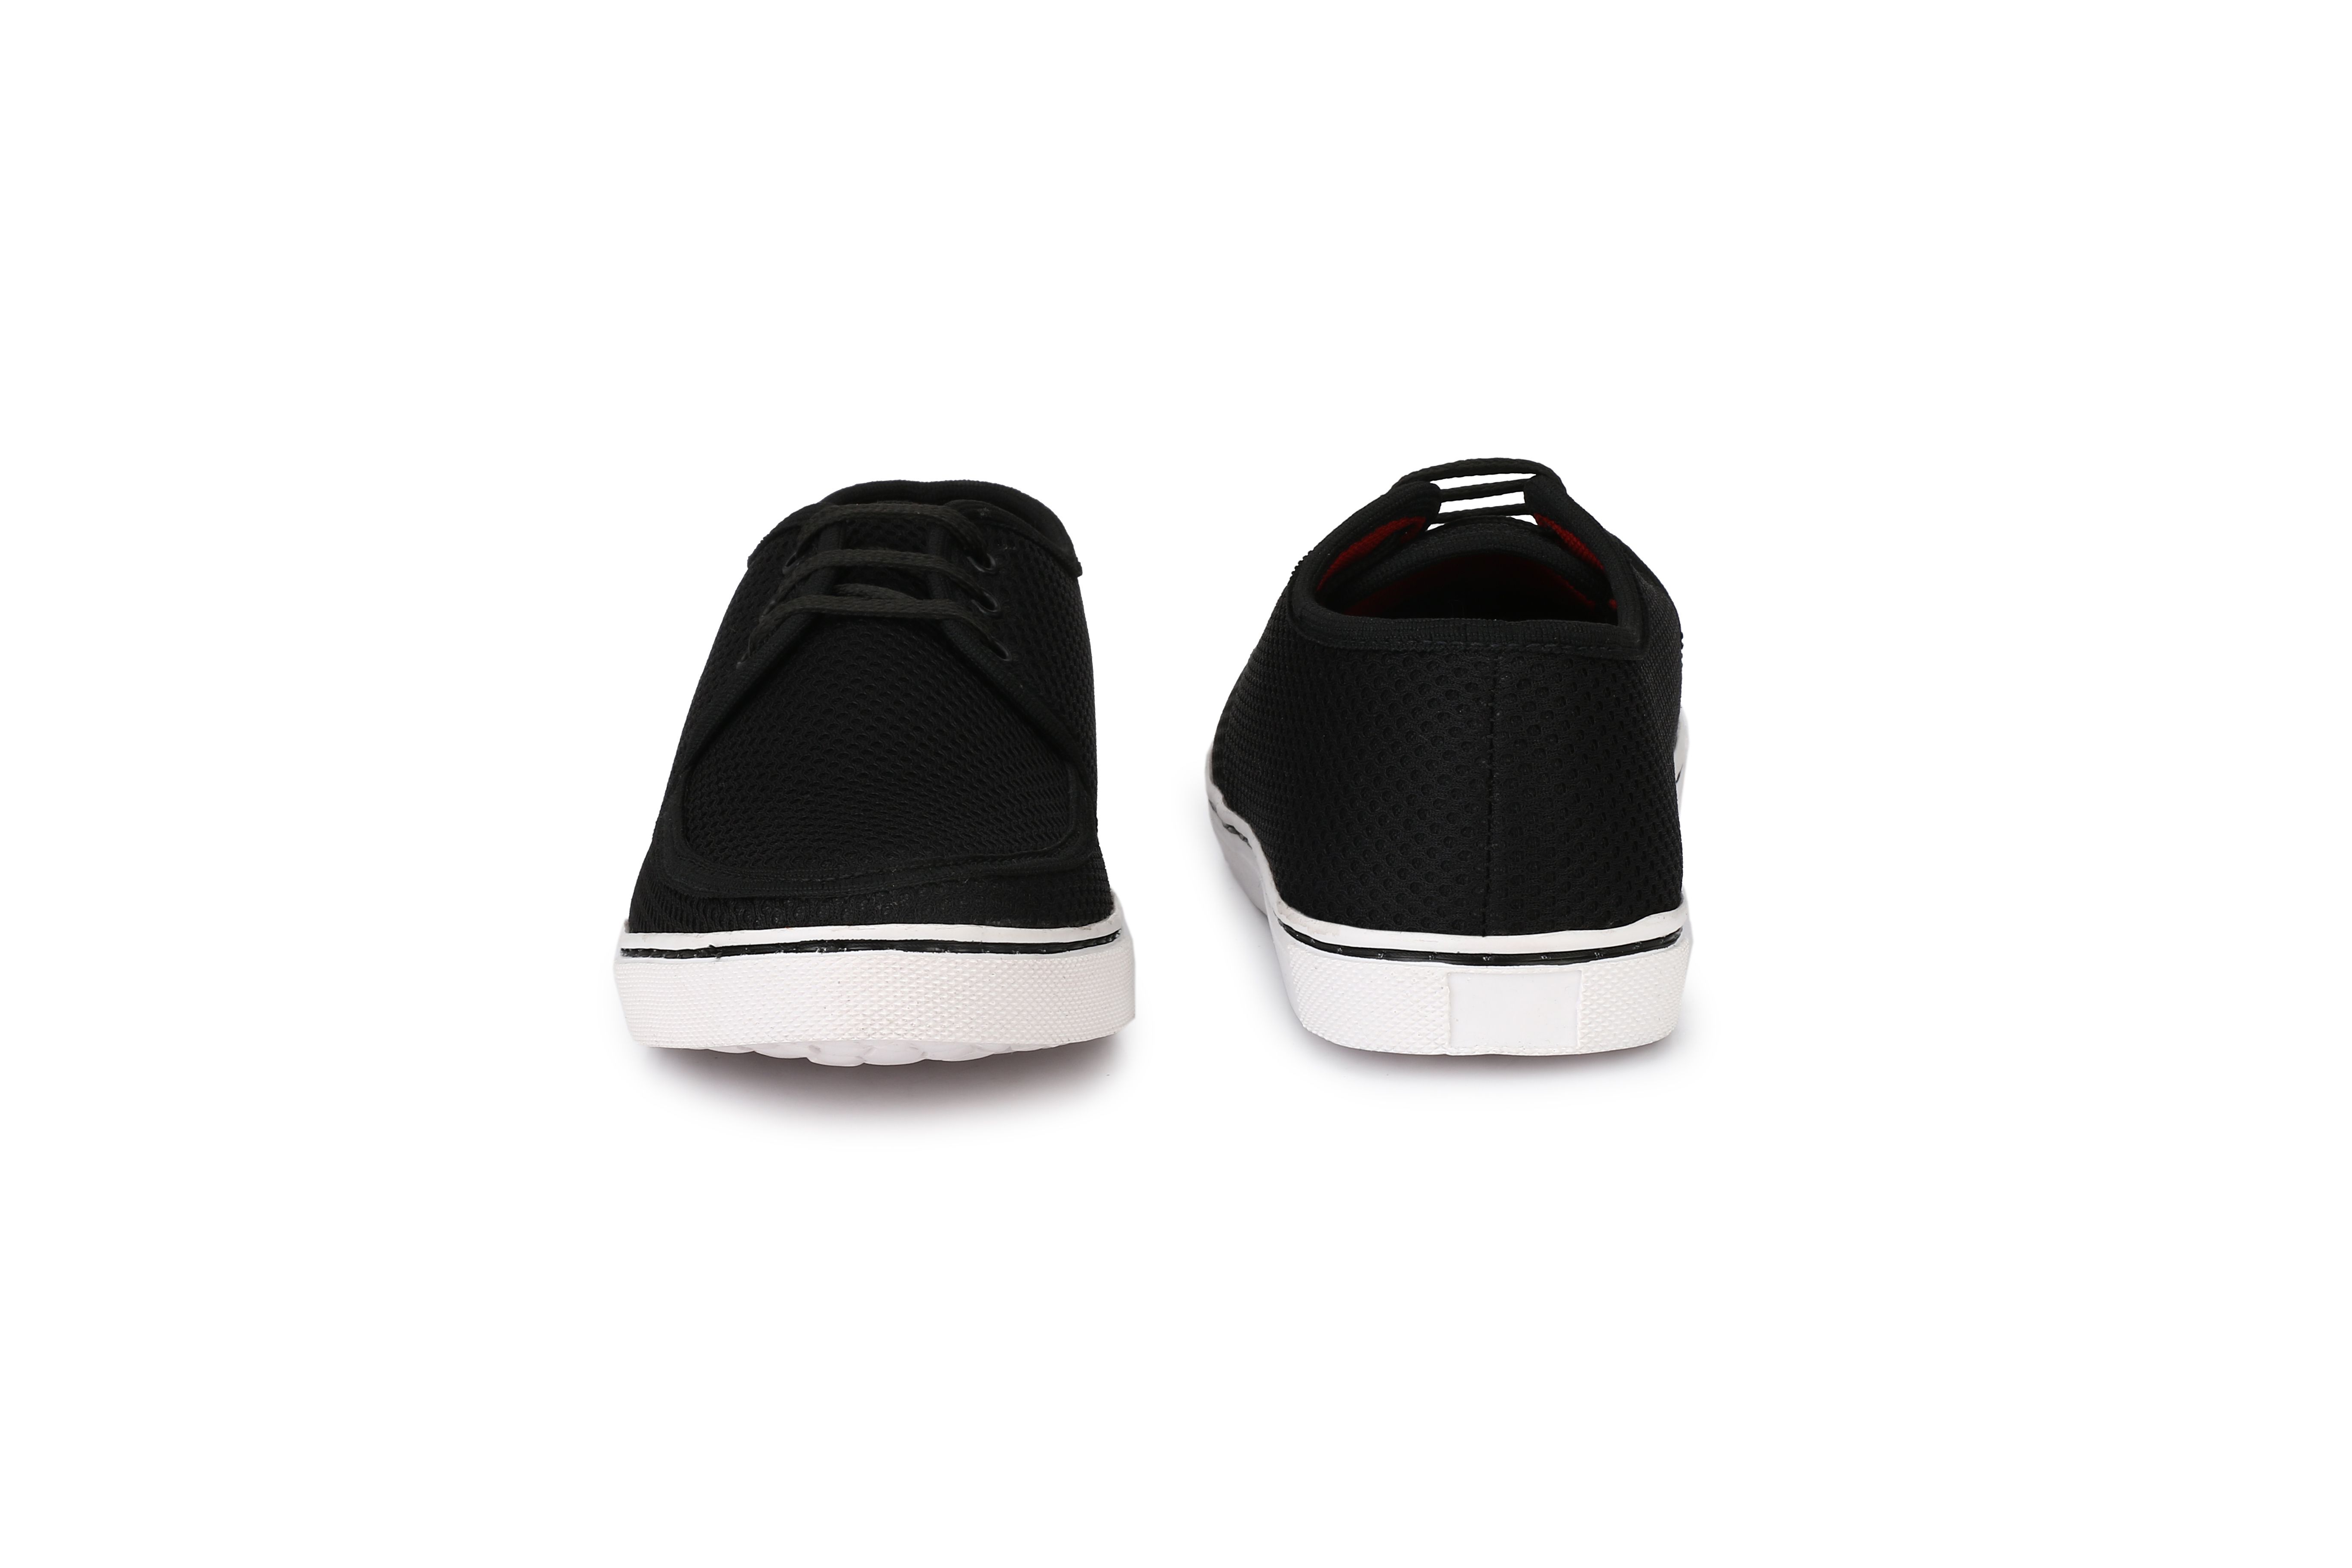 R L Shoes Sneakers Black Casual Shoes - Buy R L Shoes Sneakers Black ...